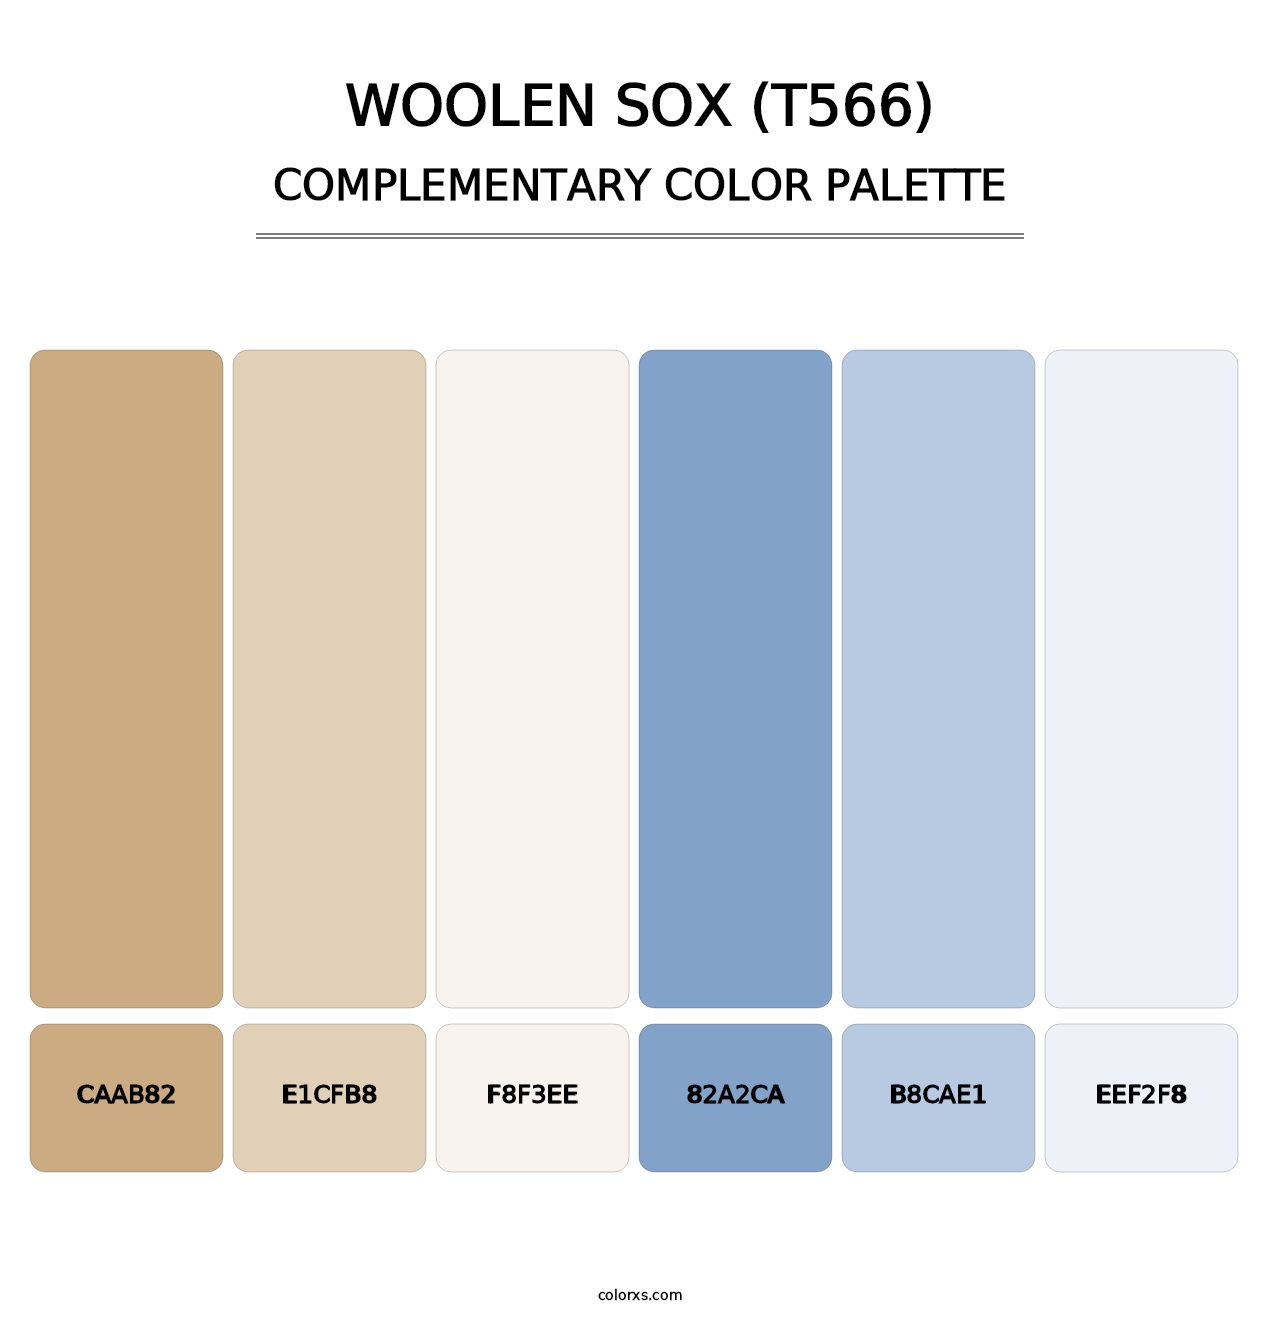 Woolen Sox (T566) - Complementary Color Palette